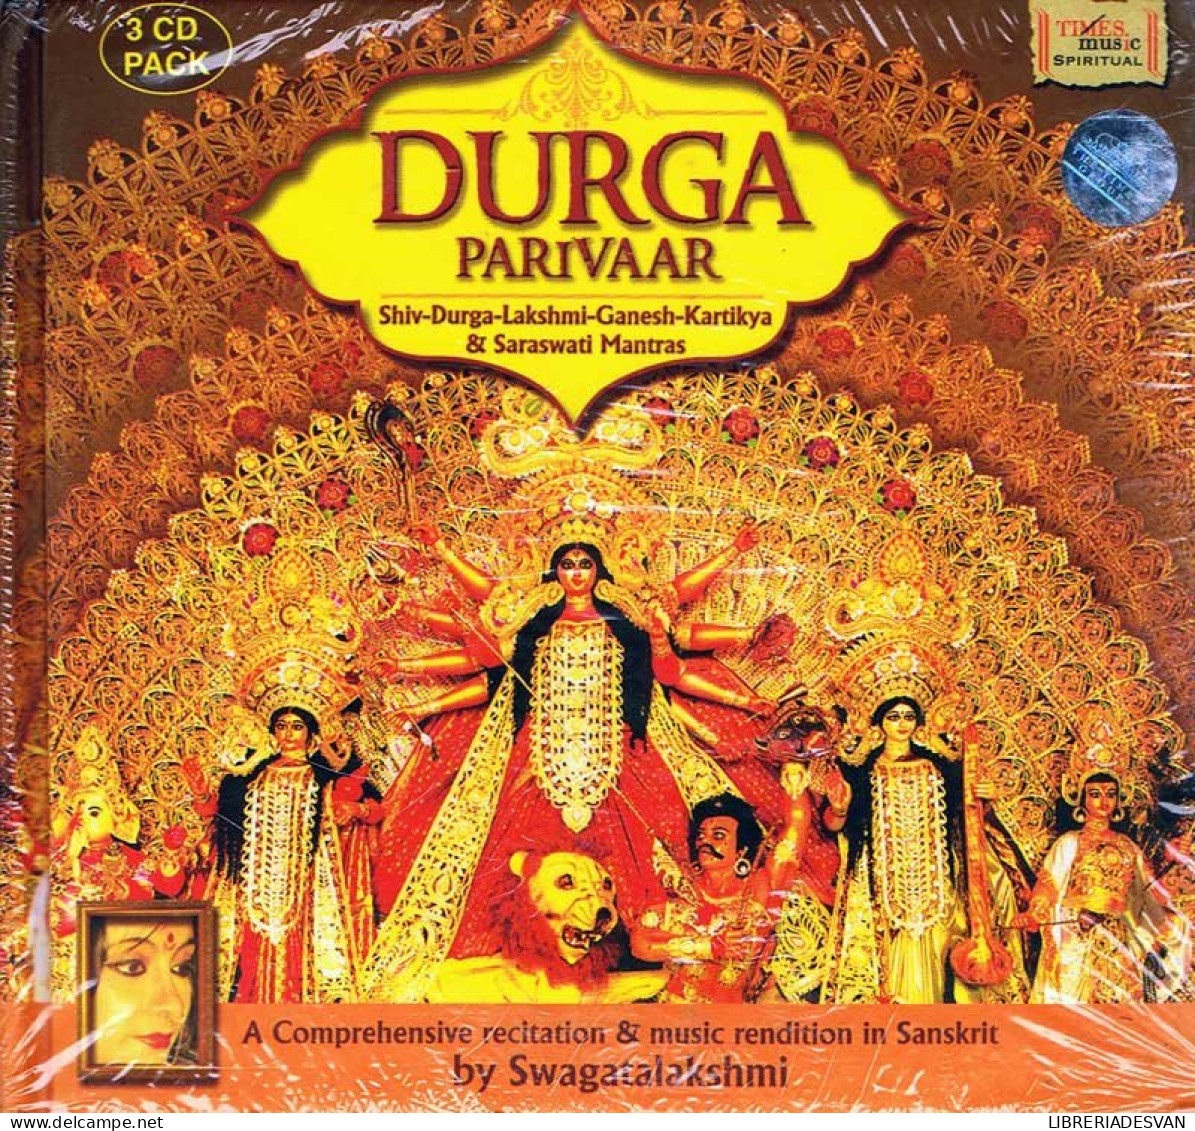 Swagatalakshmi - Durga Parivaar. 3 CD Pack - Nueva Era (New Age)